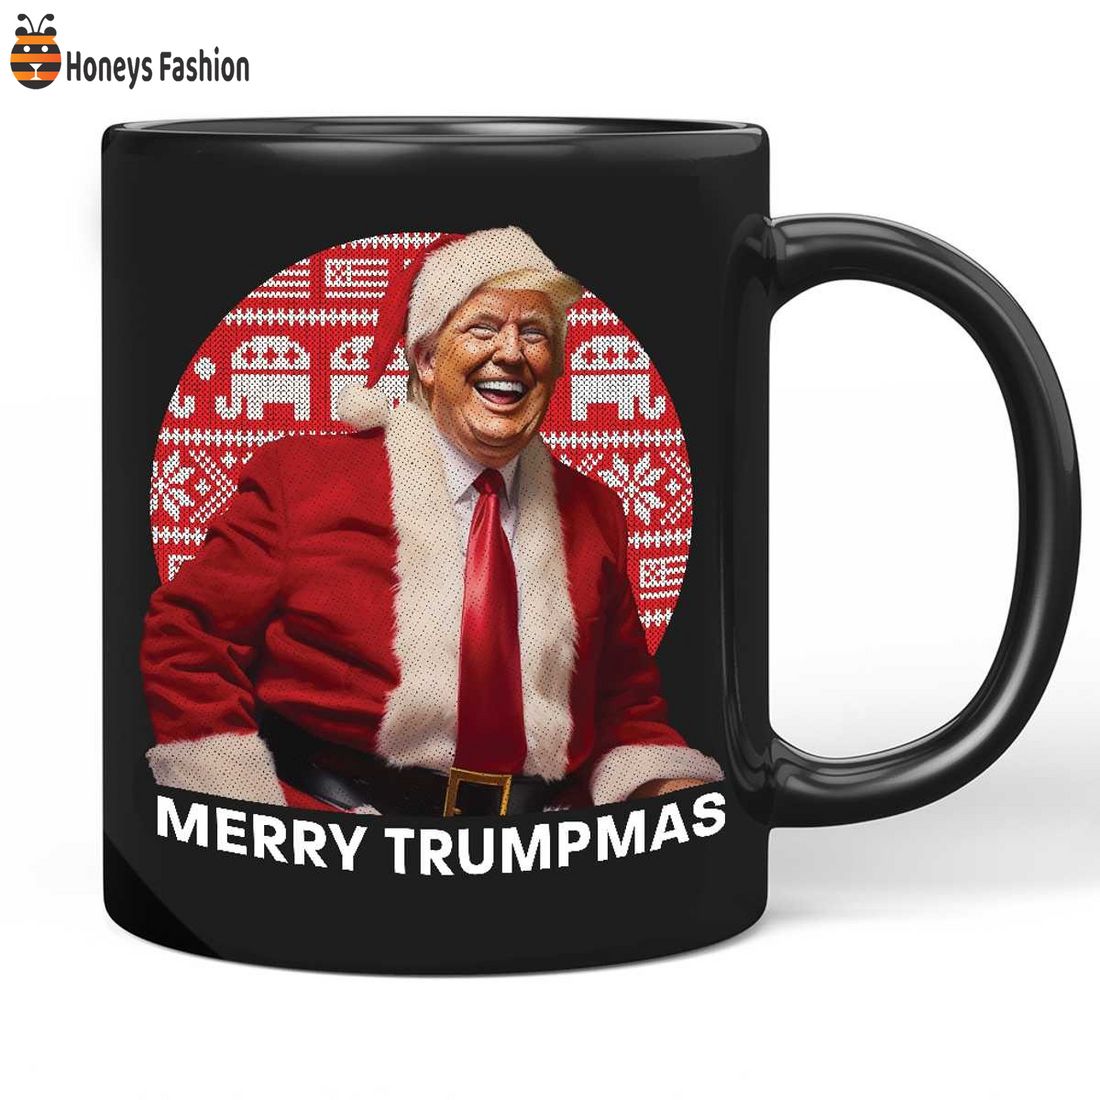 Merry trumpmas merry christmas mug